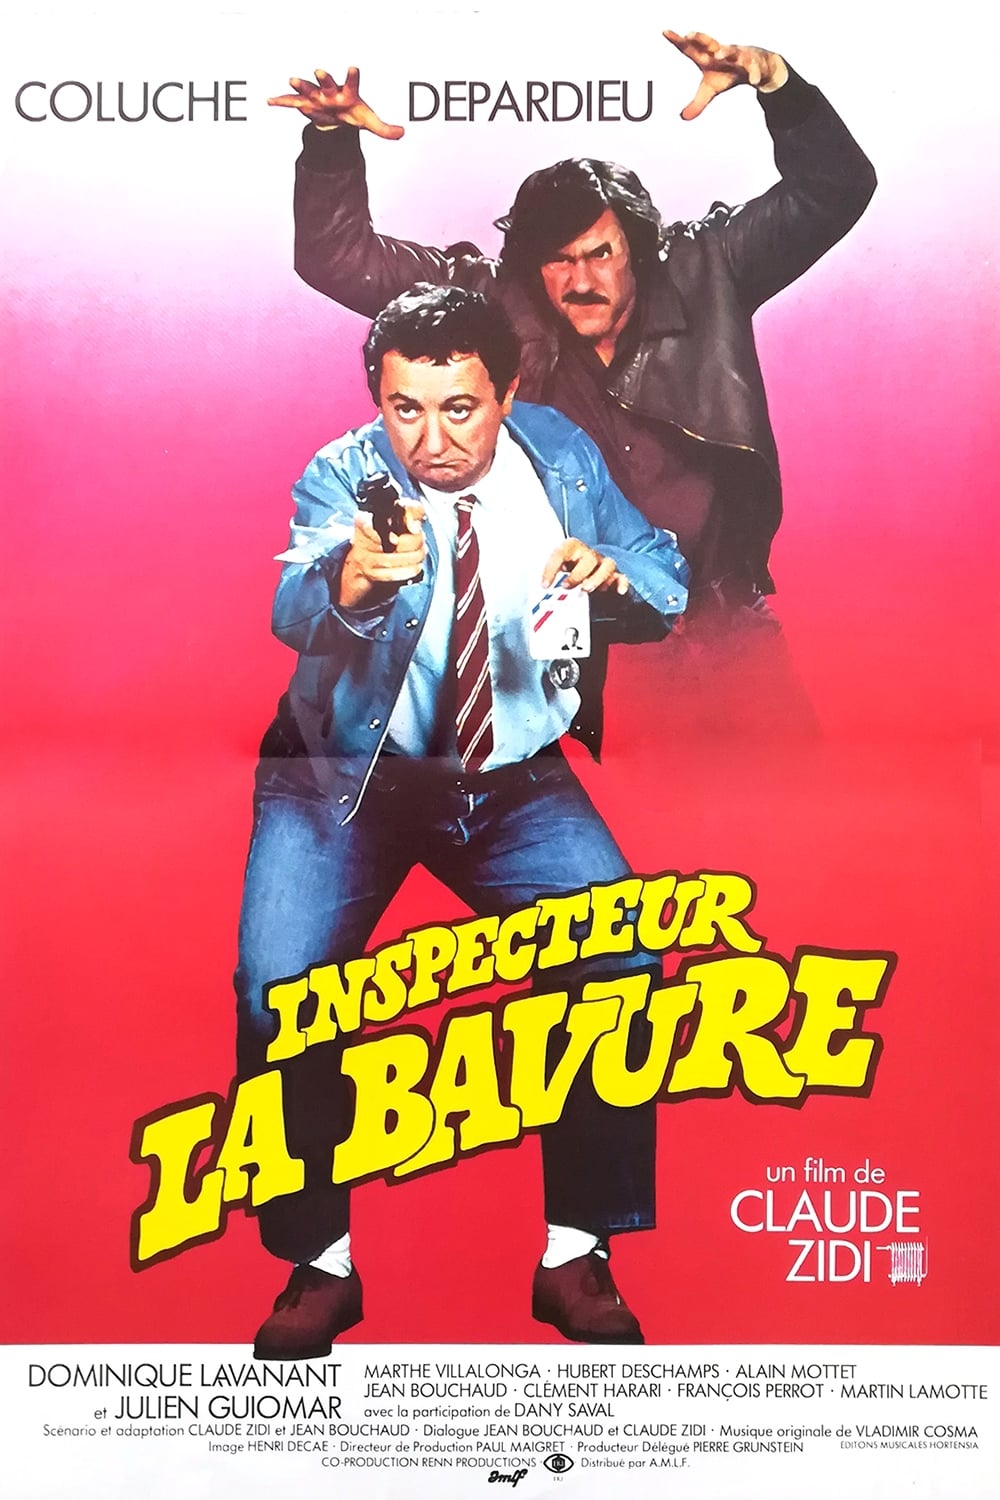 Inspector Blunder (1980)